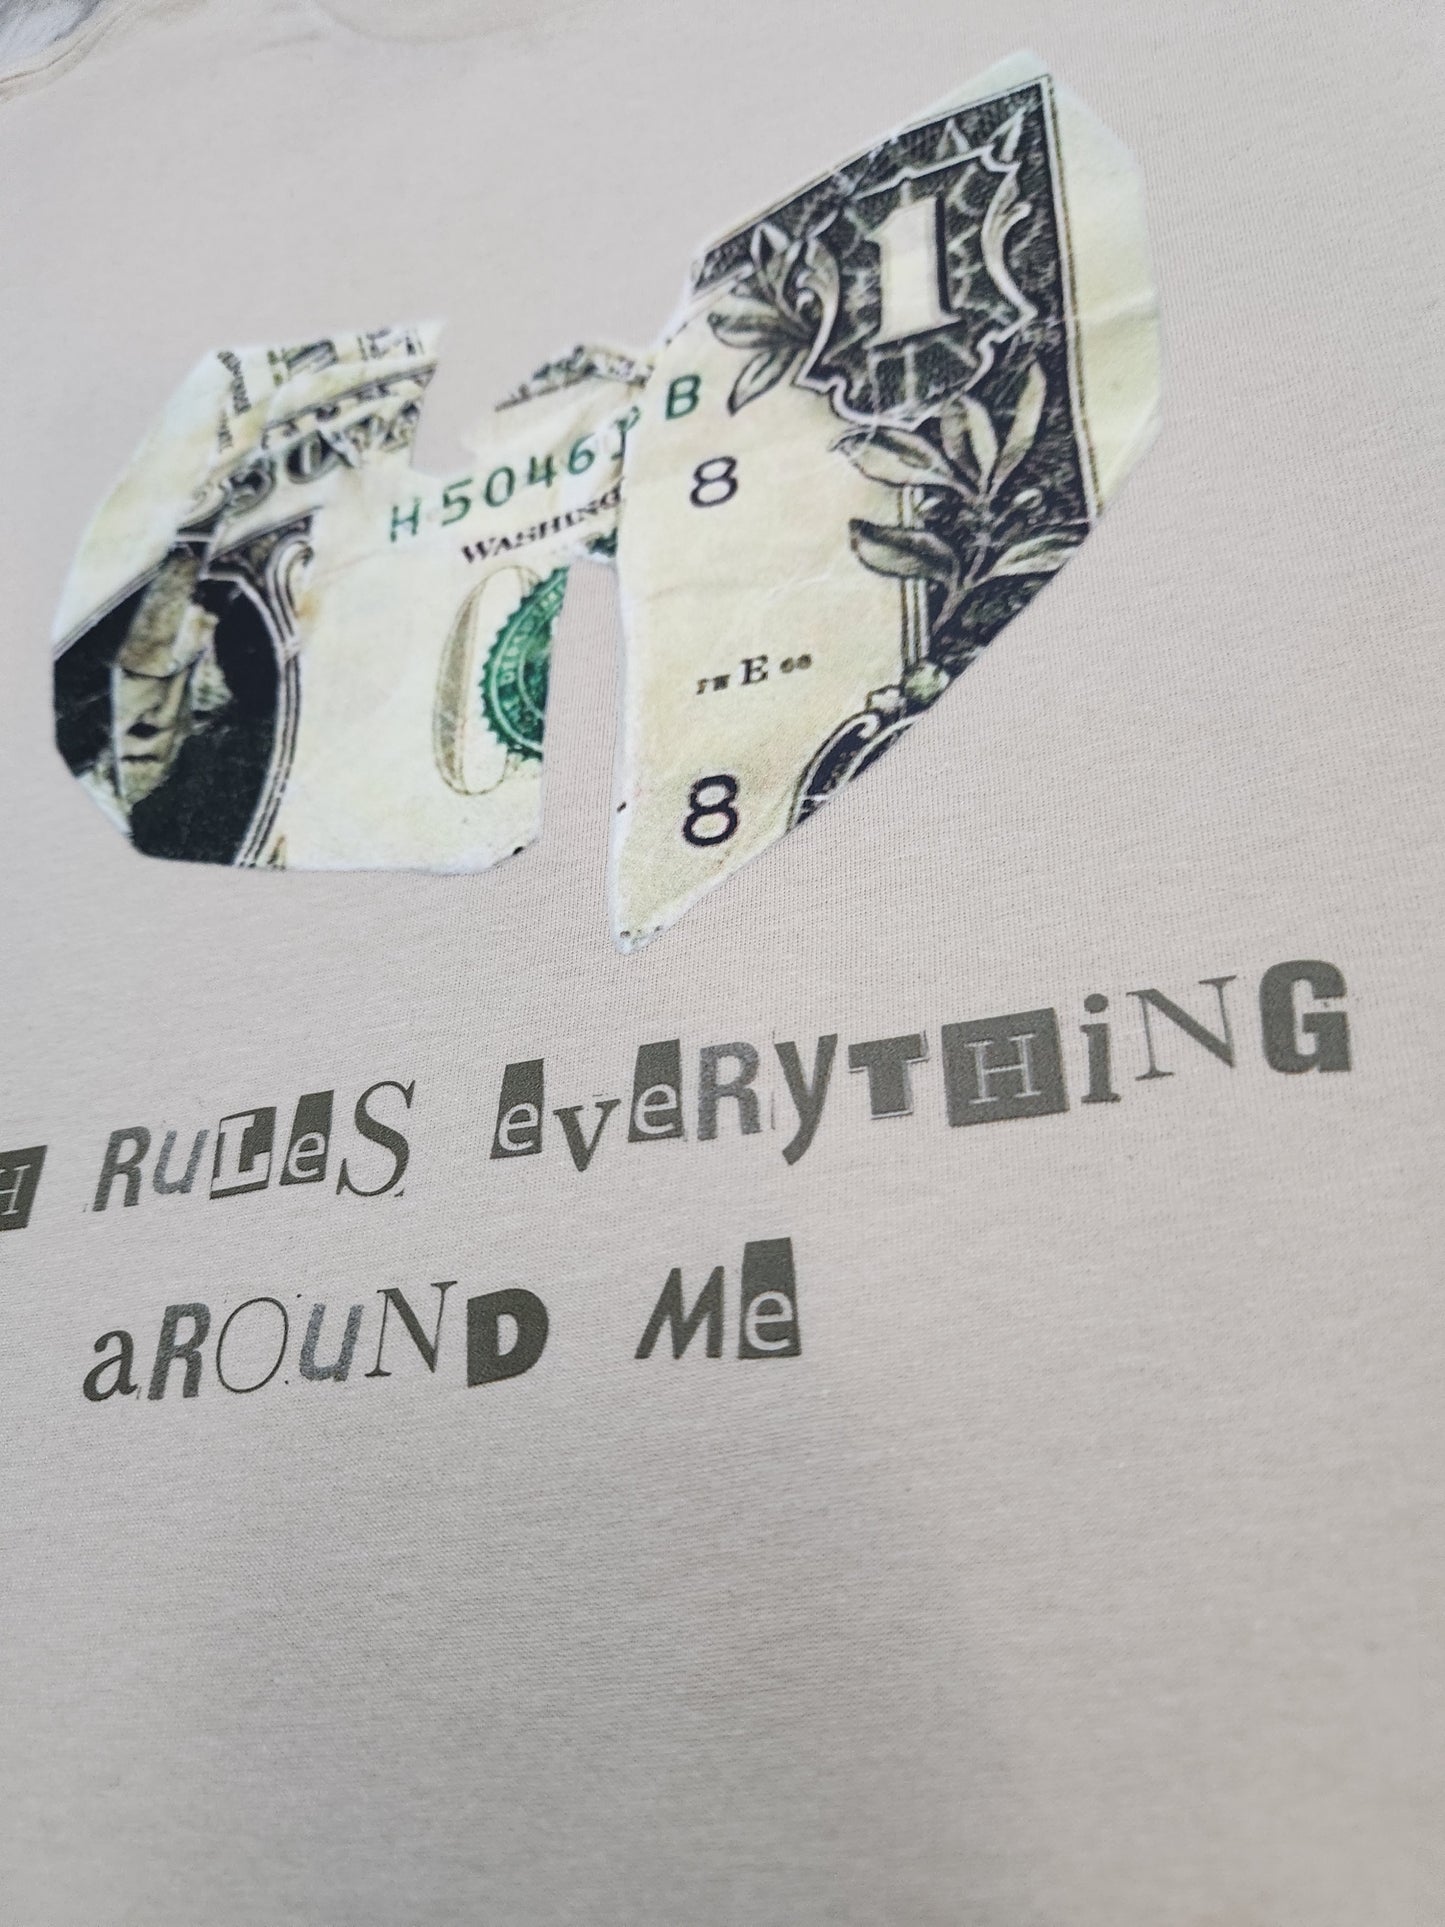 Cash Rules T-Shirt (Cream)